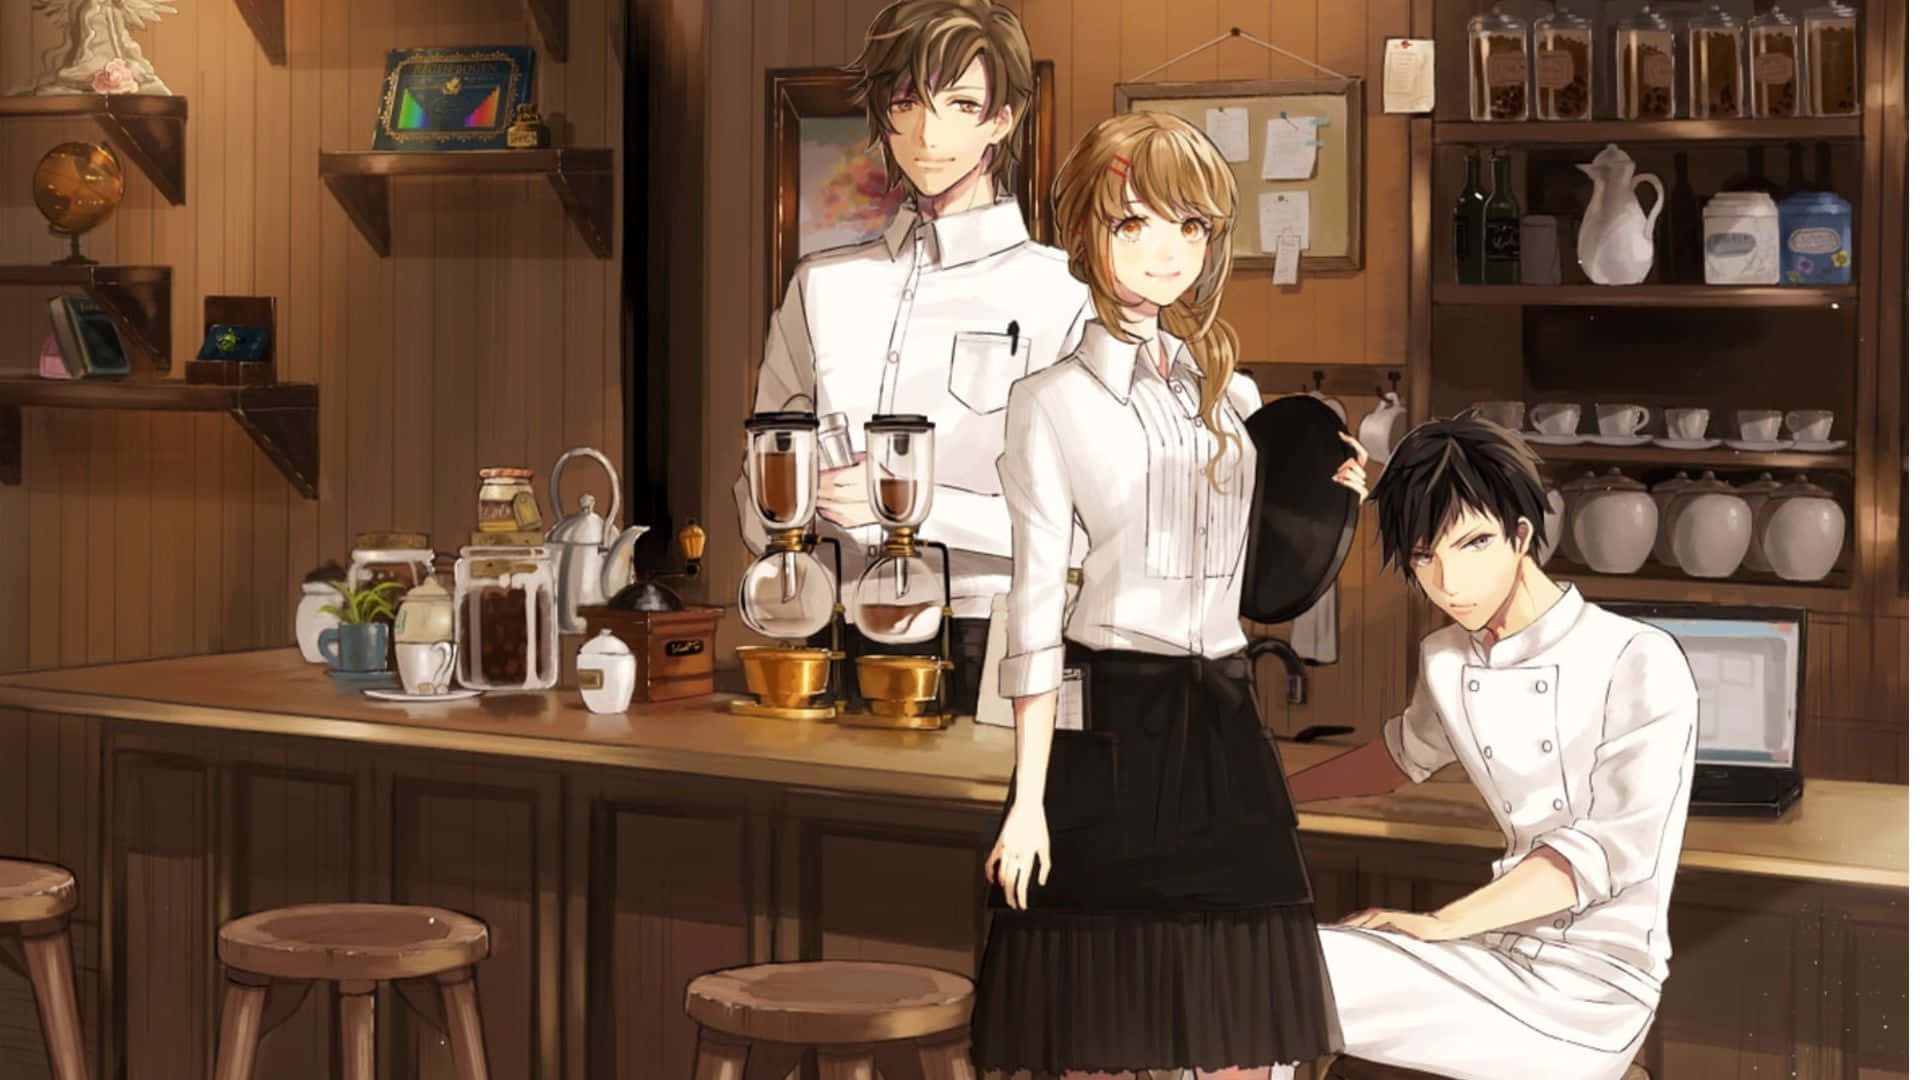 Anime Kokoro Cafe Background